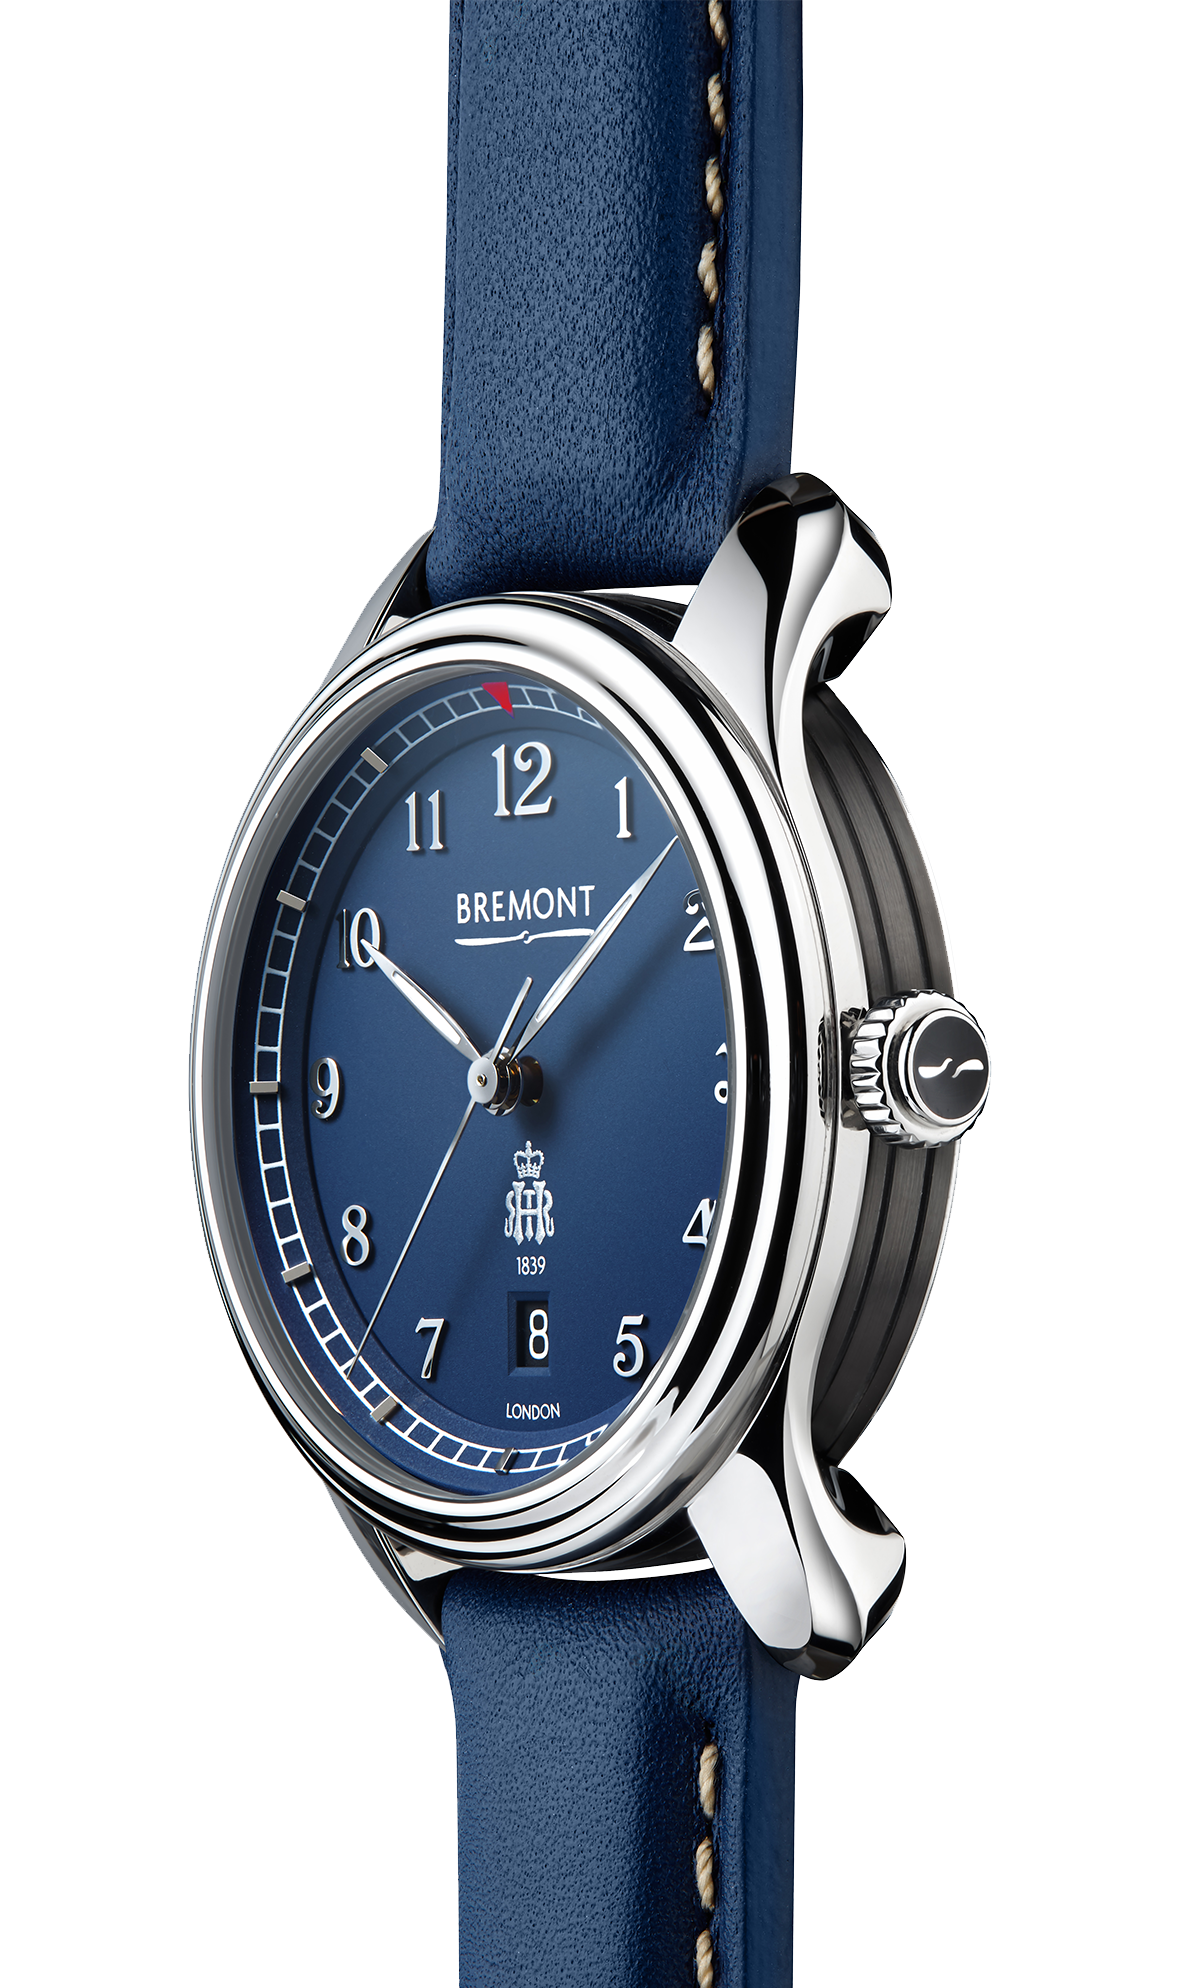 Special Edition Henley Royal Regatta Member's Timepiece